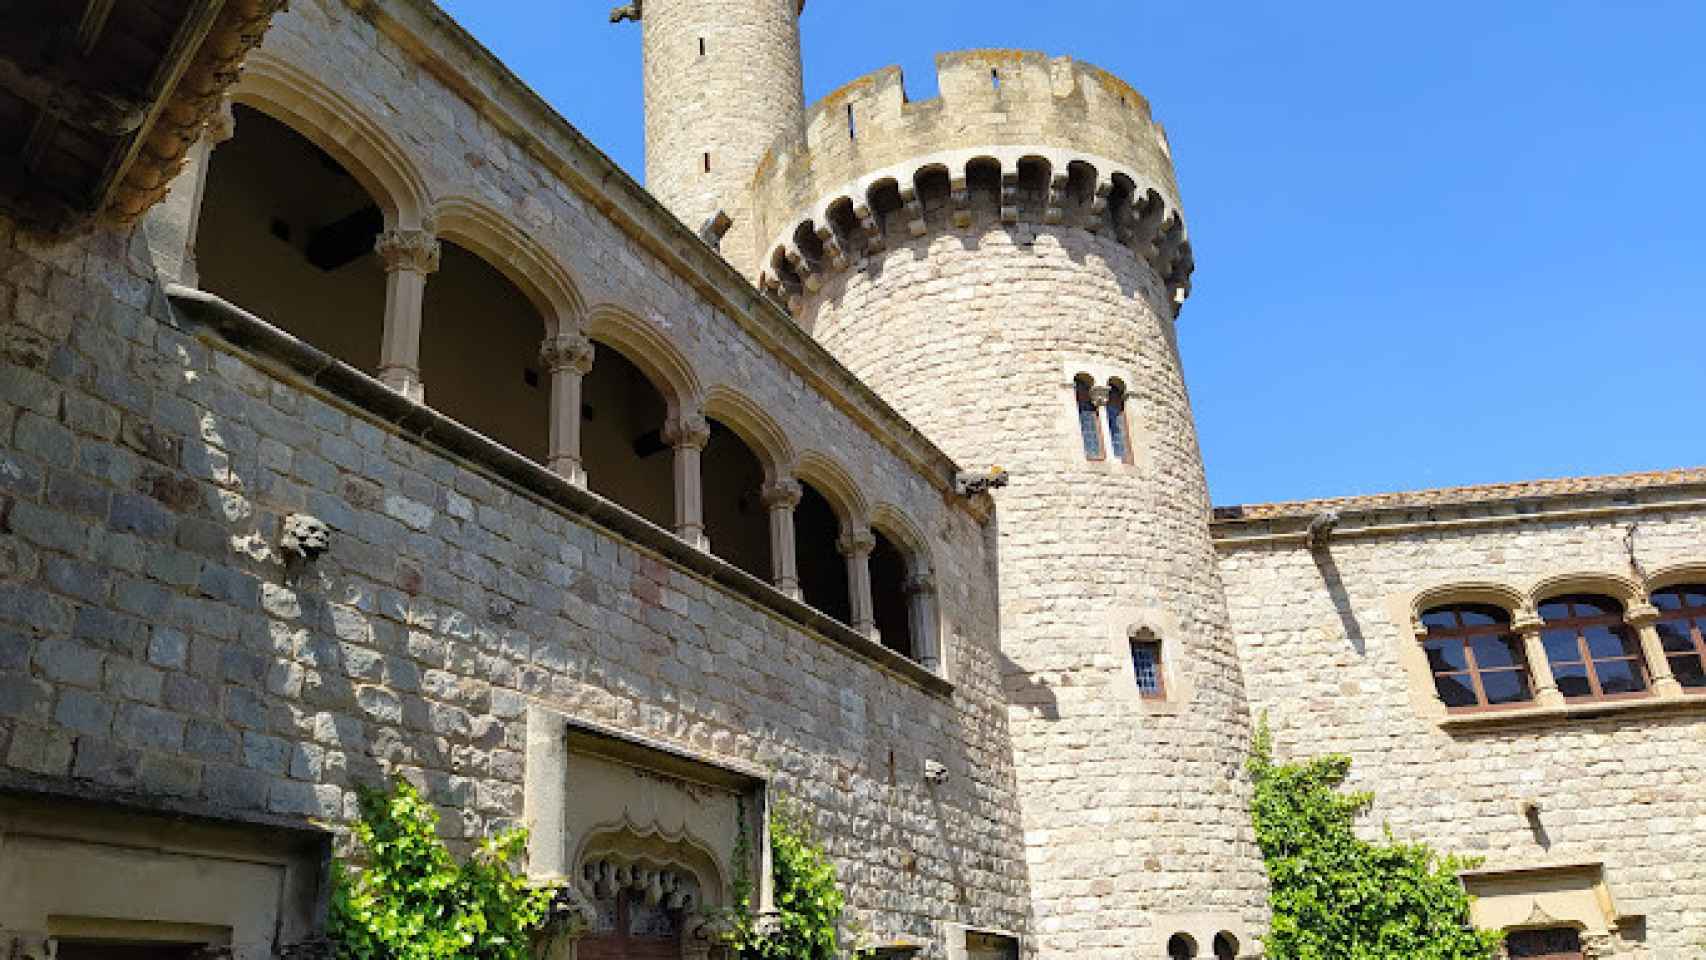 Castillo de Santa Florentina